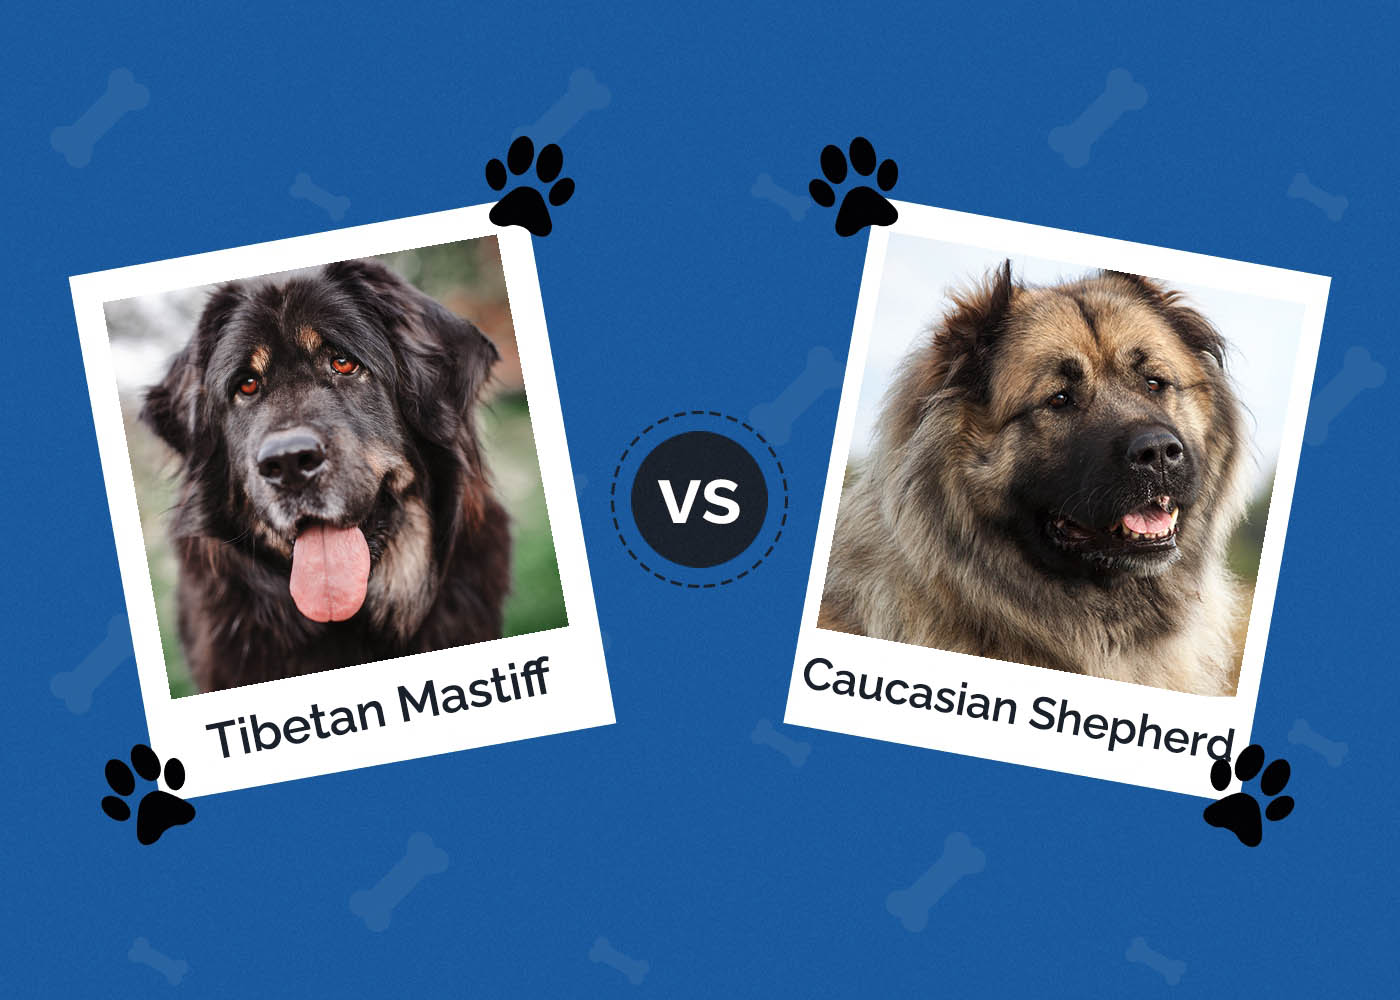 Tibetan Mastiff vs Caucasian Shepherd